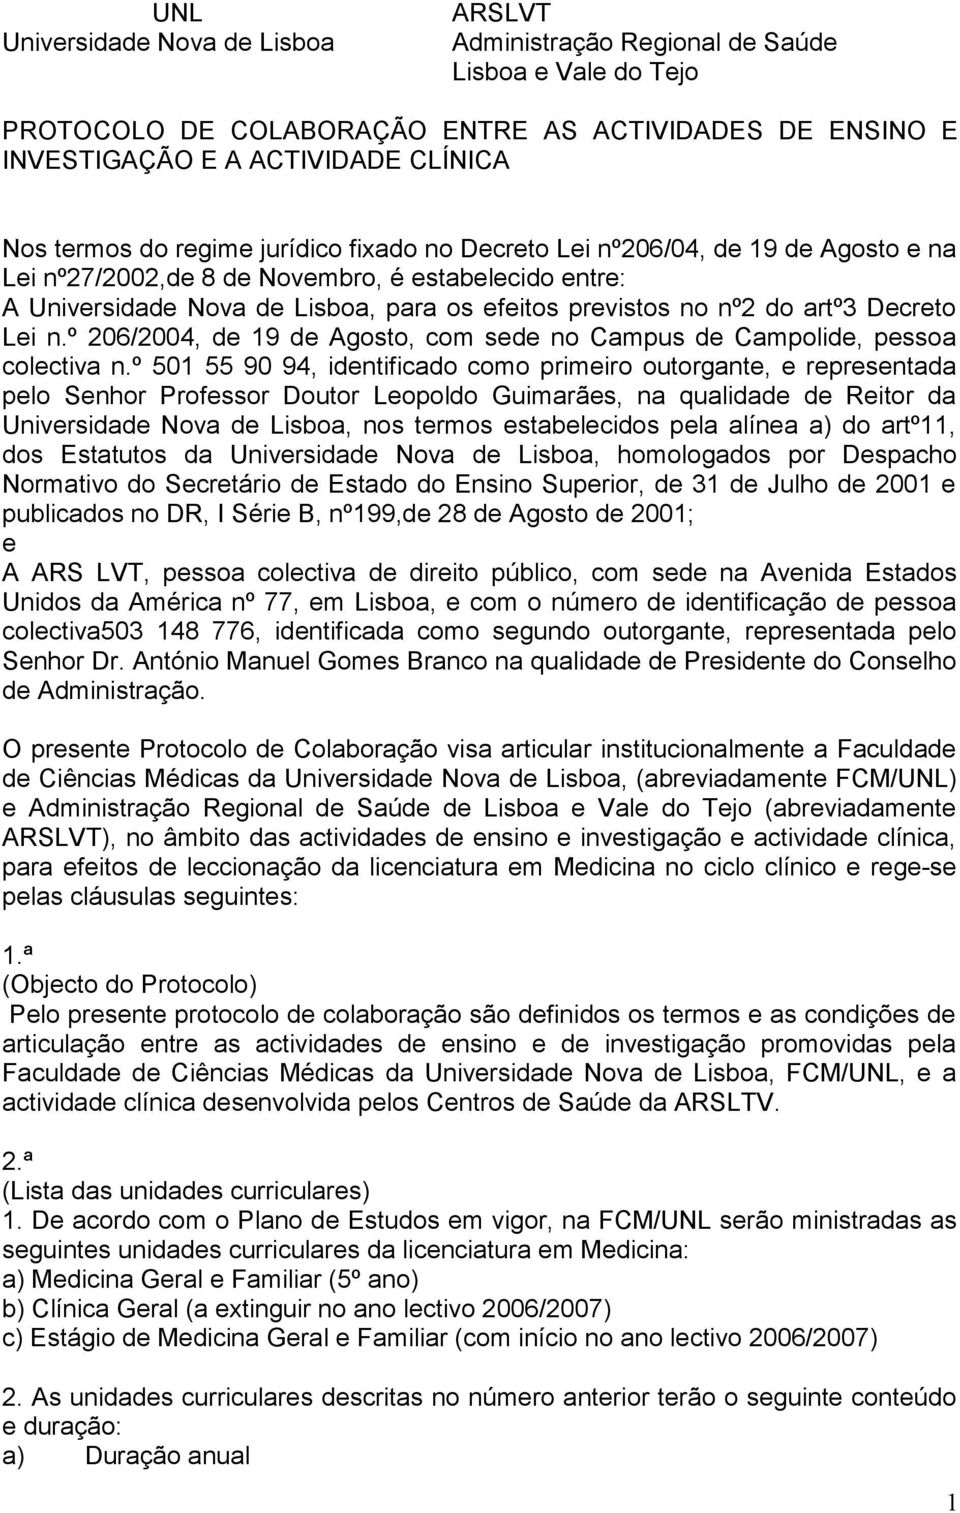 Decreto Lei n.º 206/2004, de 19 de Agosto, com sede no Campus de Campolide, pessoa colectiva n.